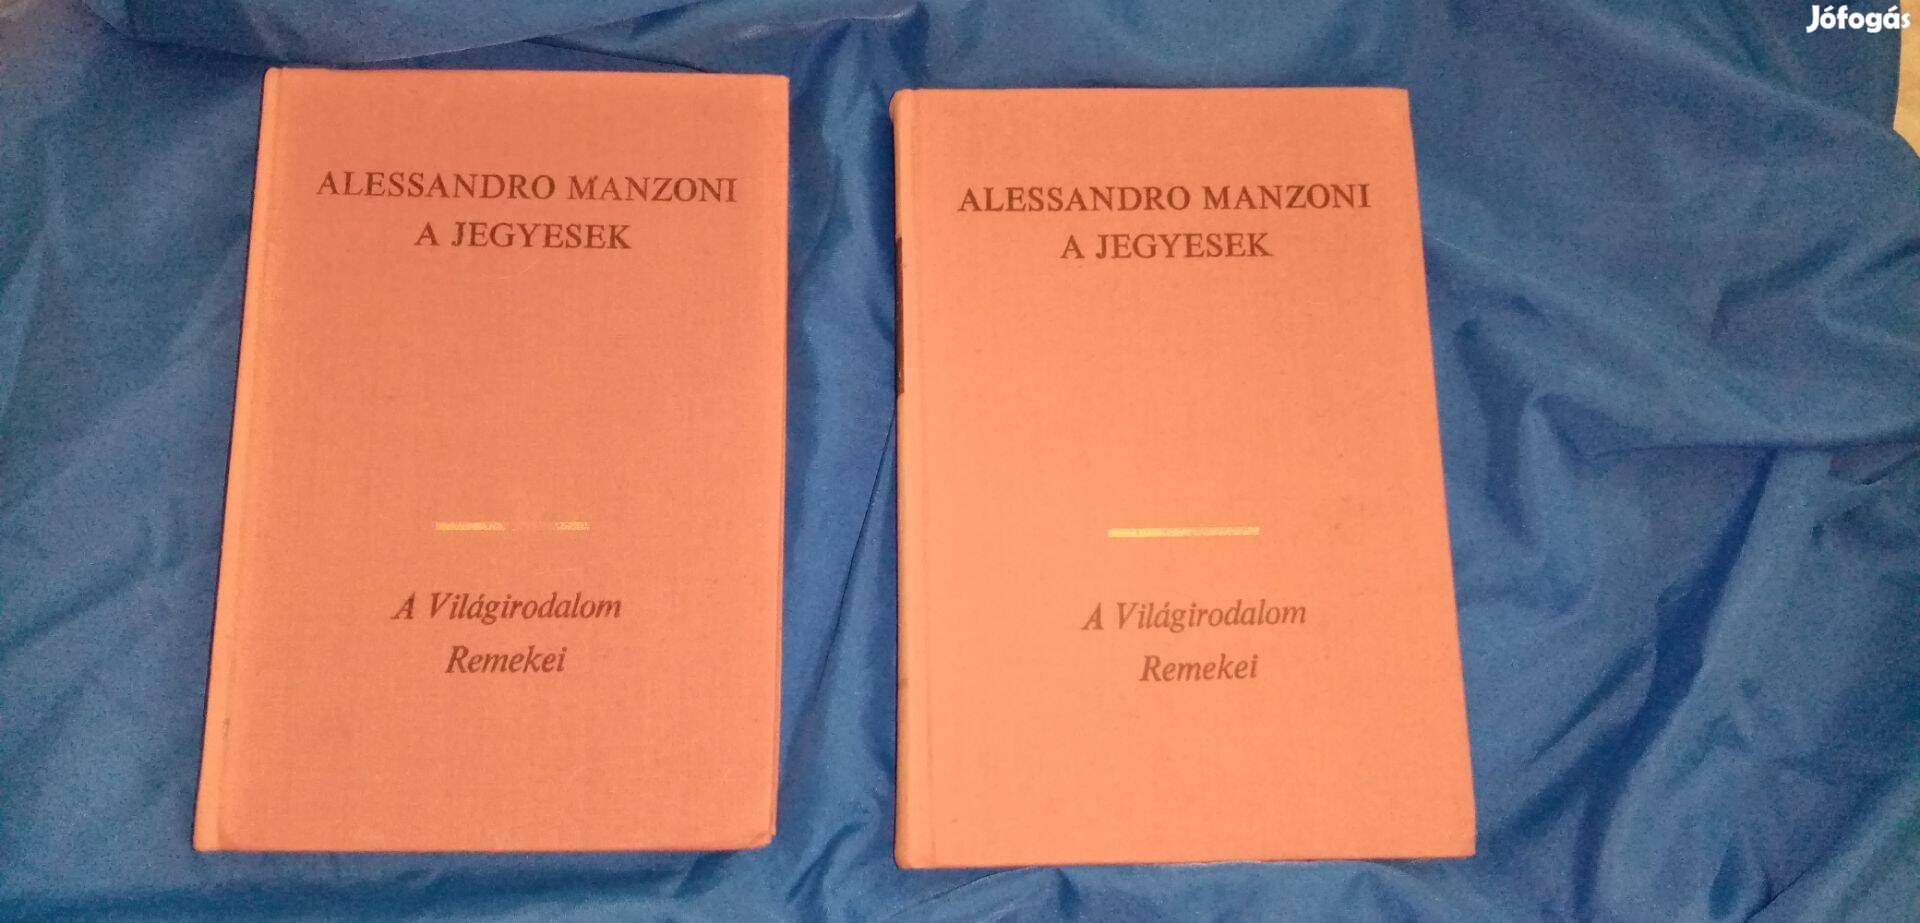 A világirodalom remekei : Alessandro Manzoni : A jegyesek I-II